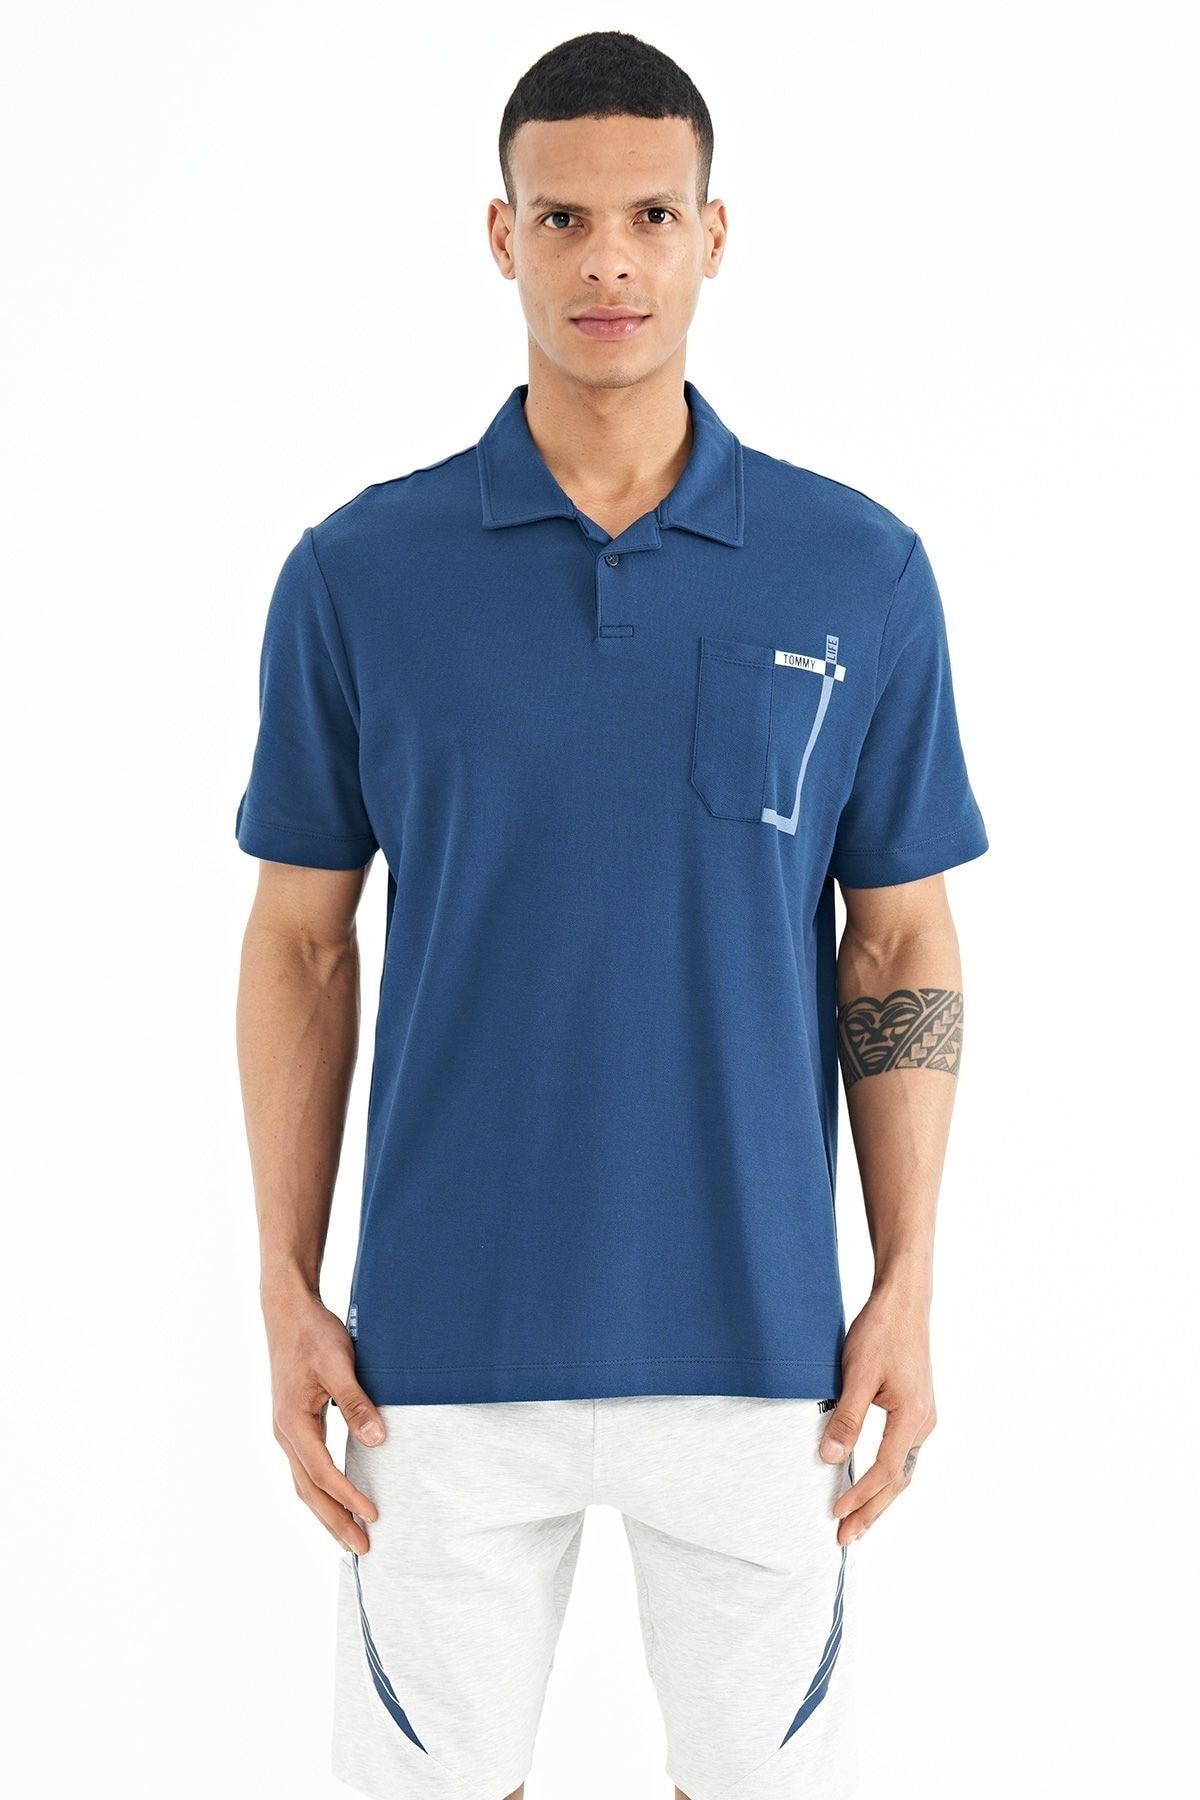 TOMMY LIFE Indigo Cep Detaylı Baskılı Standart Kalıp Polo Yaka Erkek T-shirt - 88241